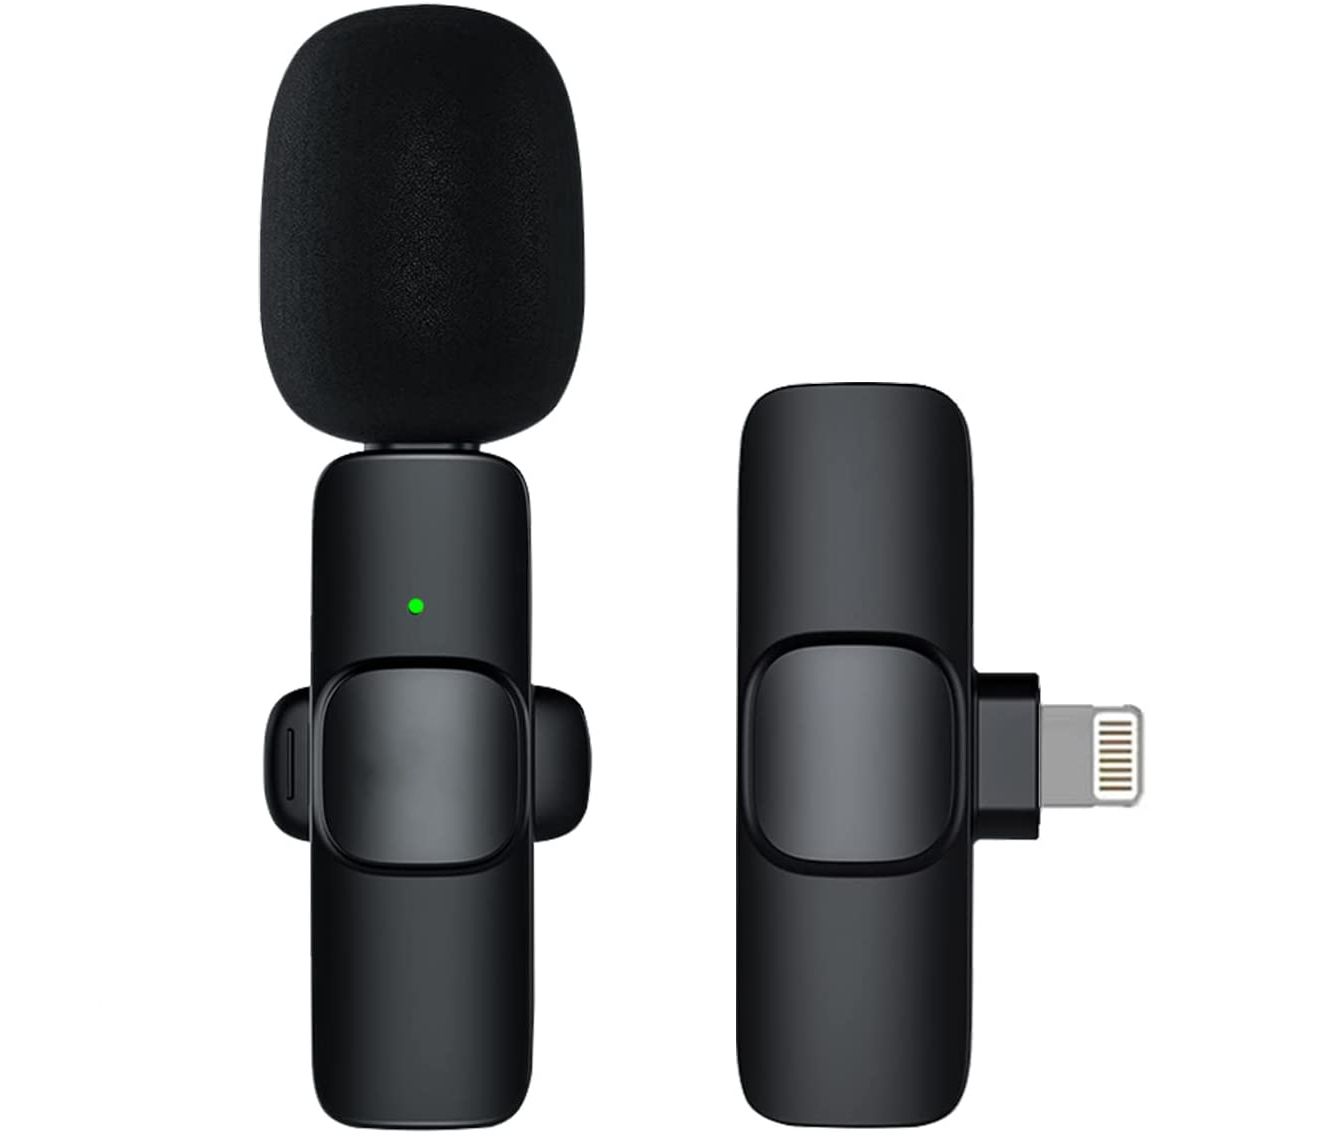 Microfon lavaliera wireless Techone K9 pentru iPhone, auto-imperechere, plug and play, omnidirectional, reducere zgomot de fond, pentru vlog, youtube, negru